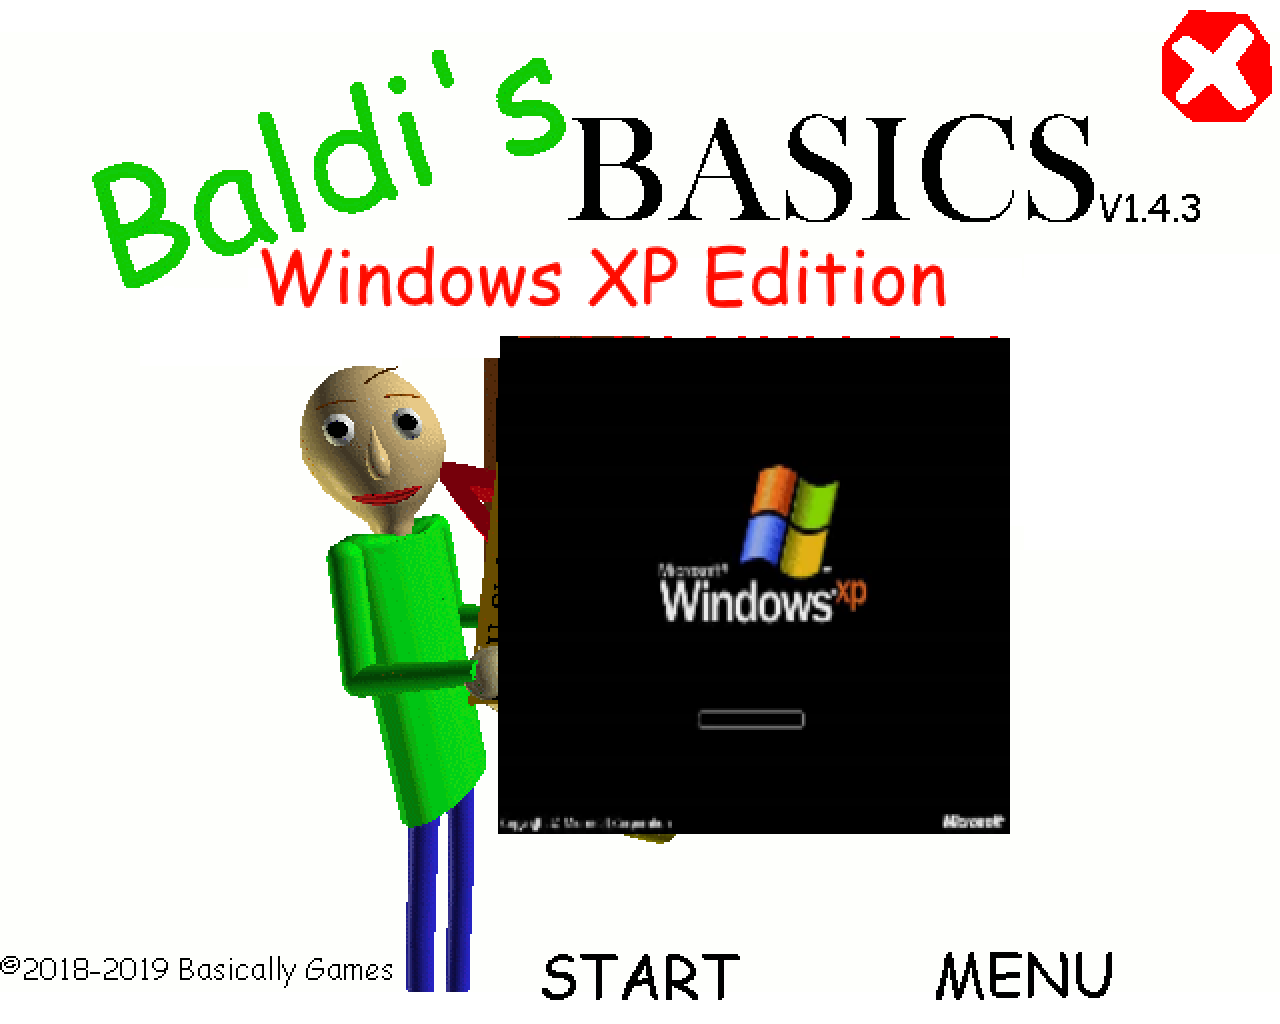 Baldis basics edition. Baldis Basics Scratch Edition. Baldi Android. Baldis Basics Exclusive Edition. Basically games.